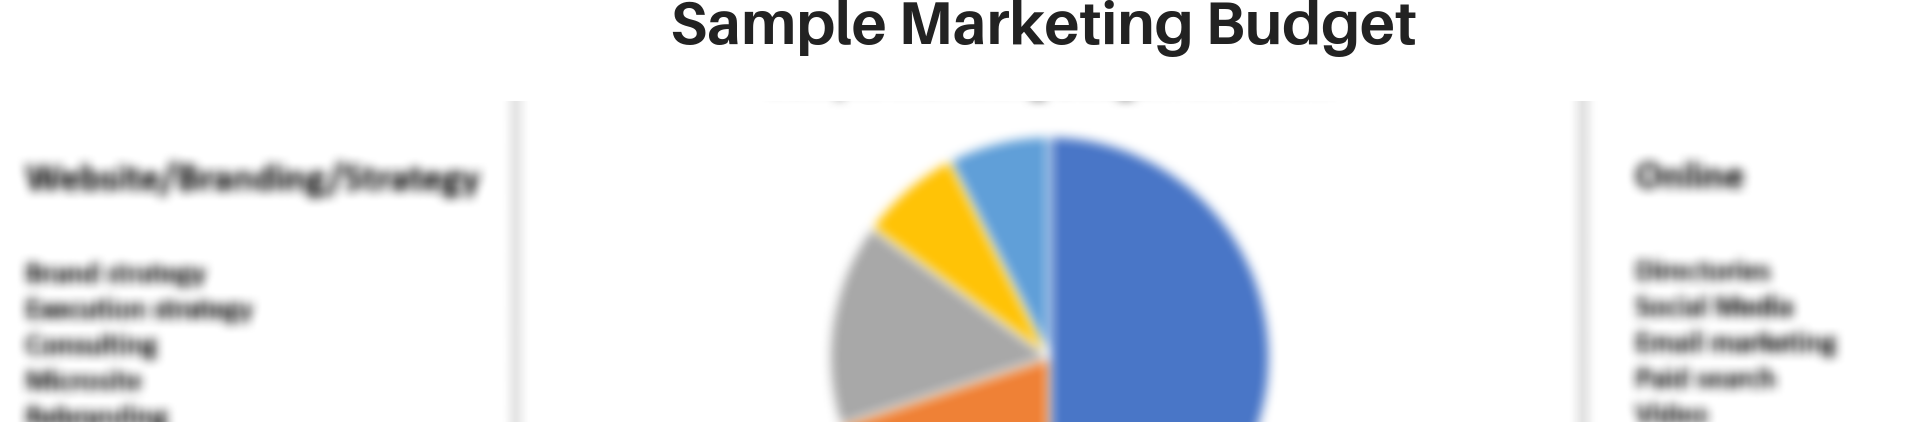 Sample Marketing Budget